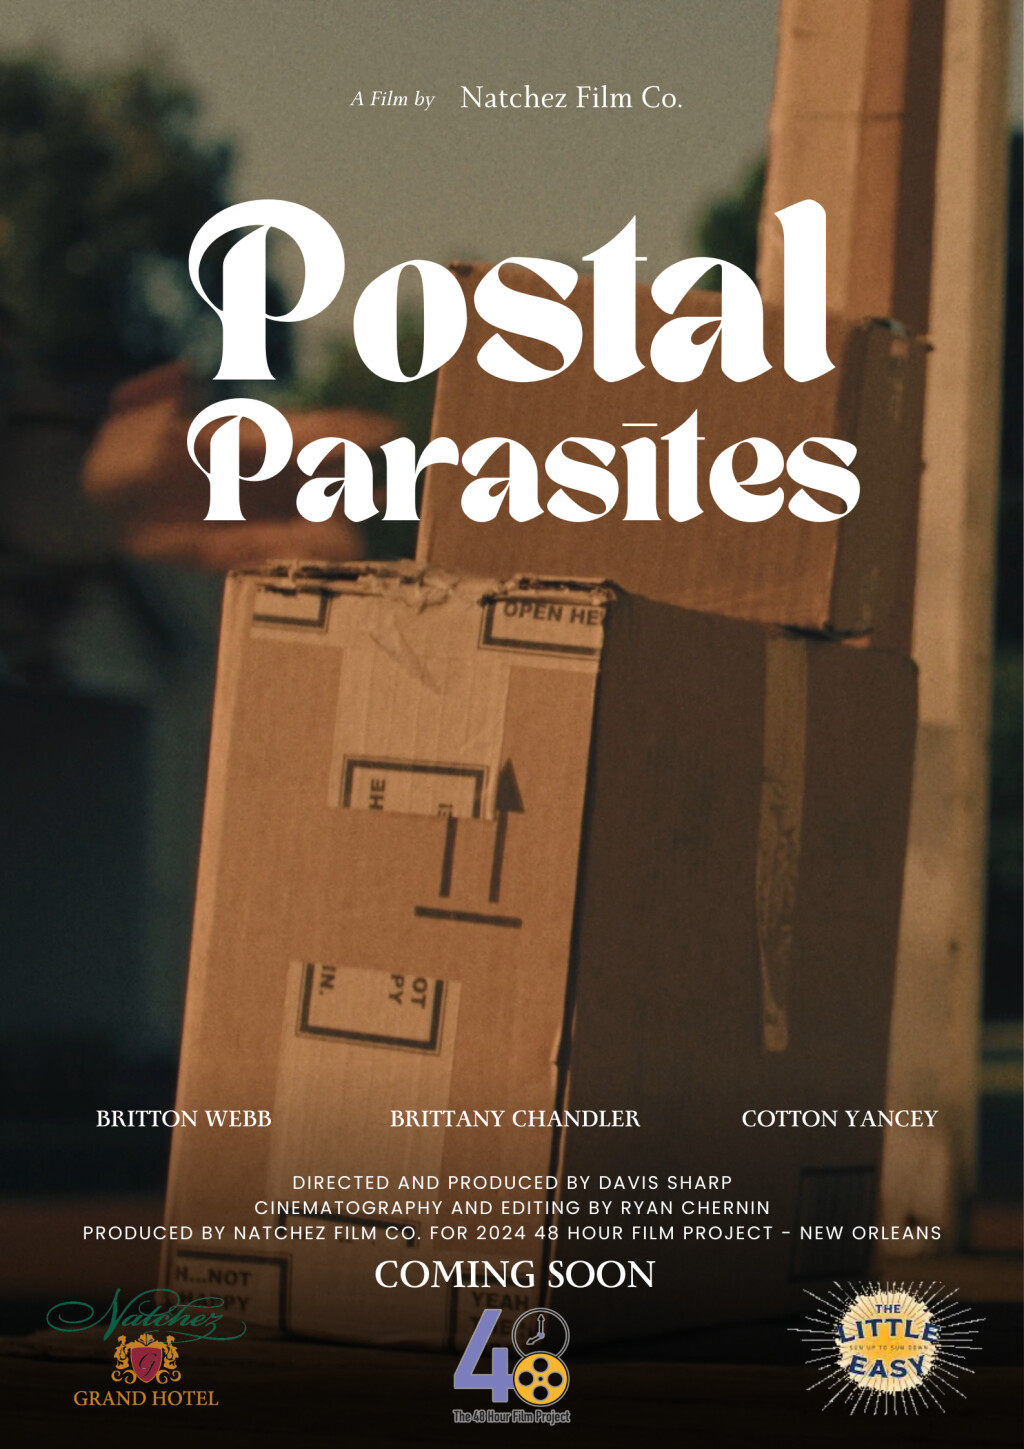 Filmposter for Postal Parasites